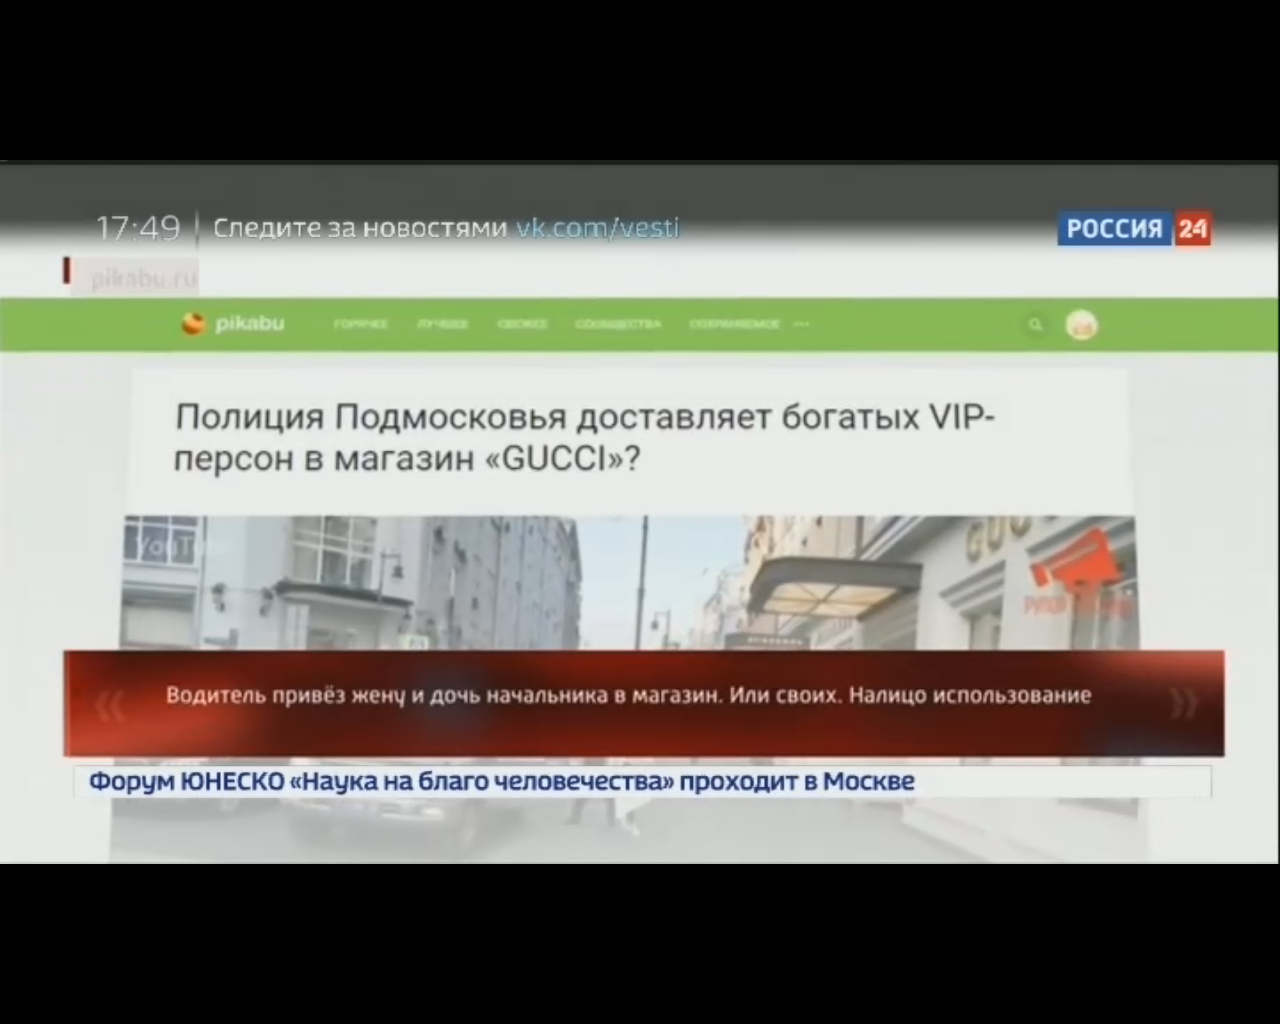 pikabu on tv - Peekaboo, The television, Russia 24, Gucci, news, Video, Longpost, Peekaboo in the media